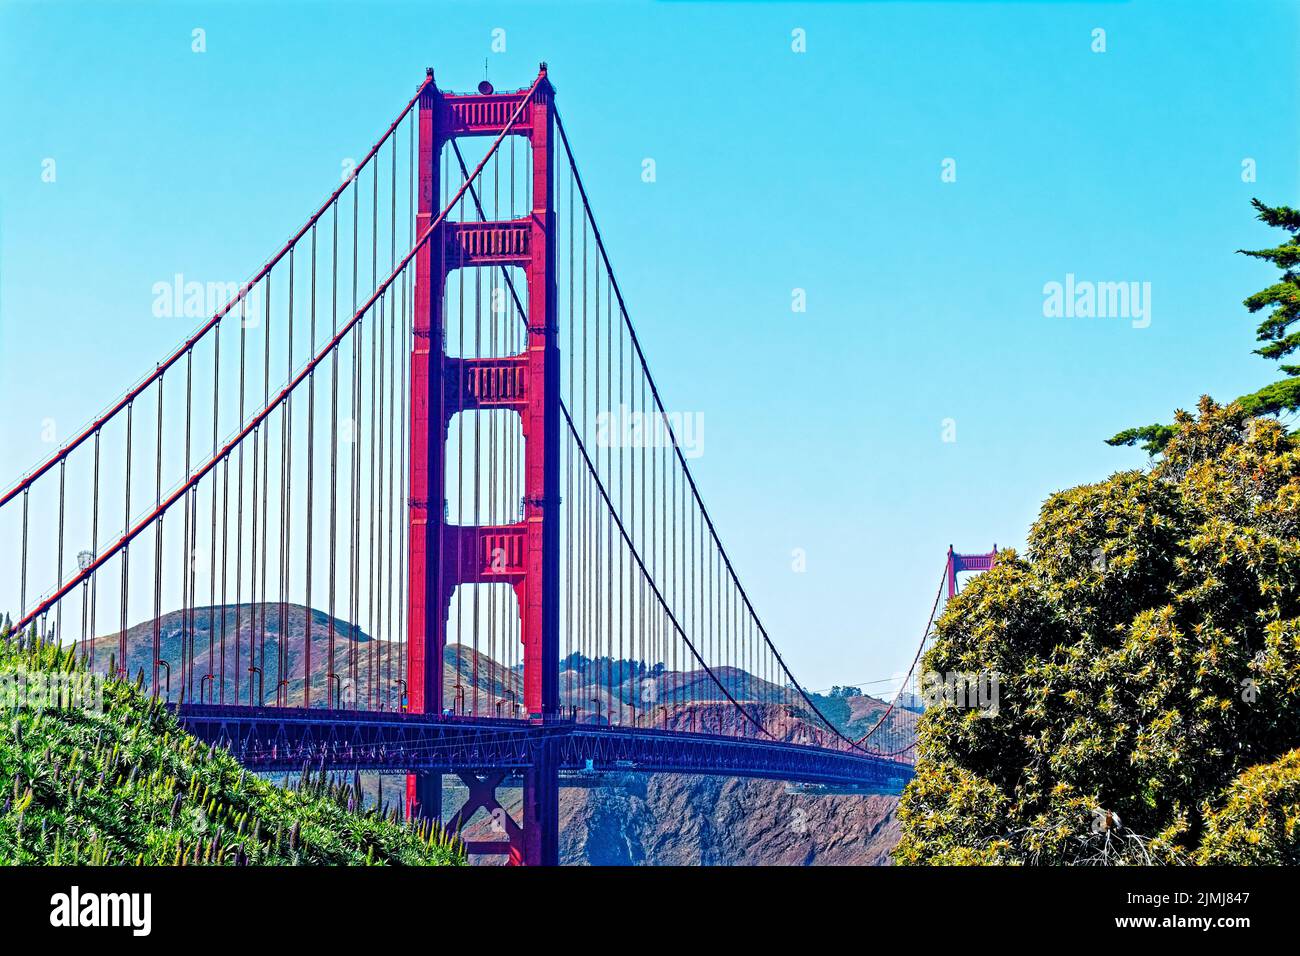 SAN FRANCISCO, CALIFORNIA - April 25, 2022: The Golden Gate Bridge is a suspension bridge spanning the Golden Gate, the one-mile-wide strait connectin Stock Photo